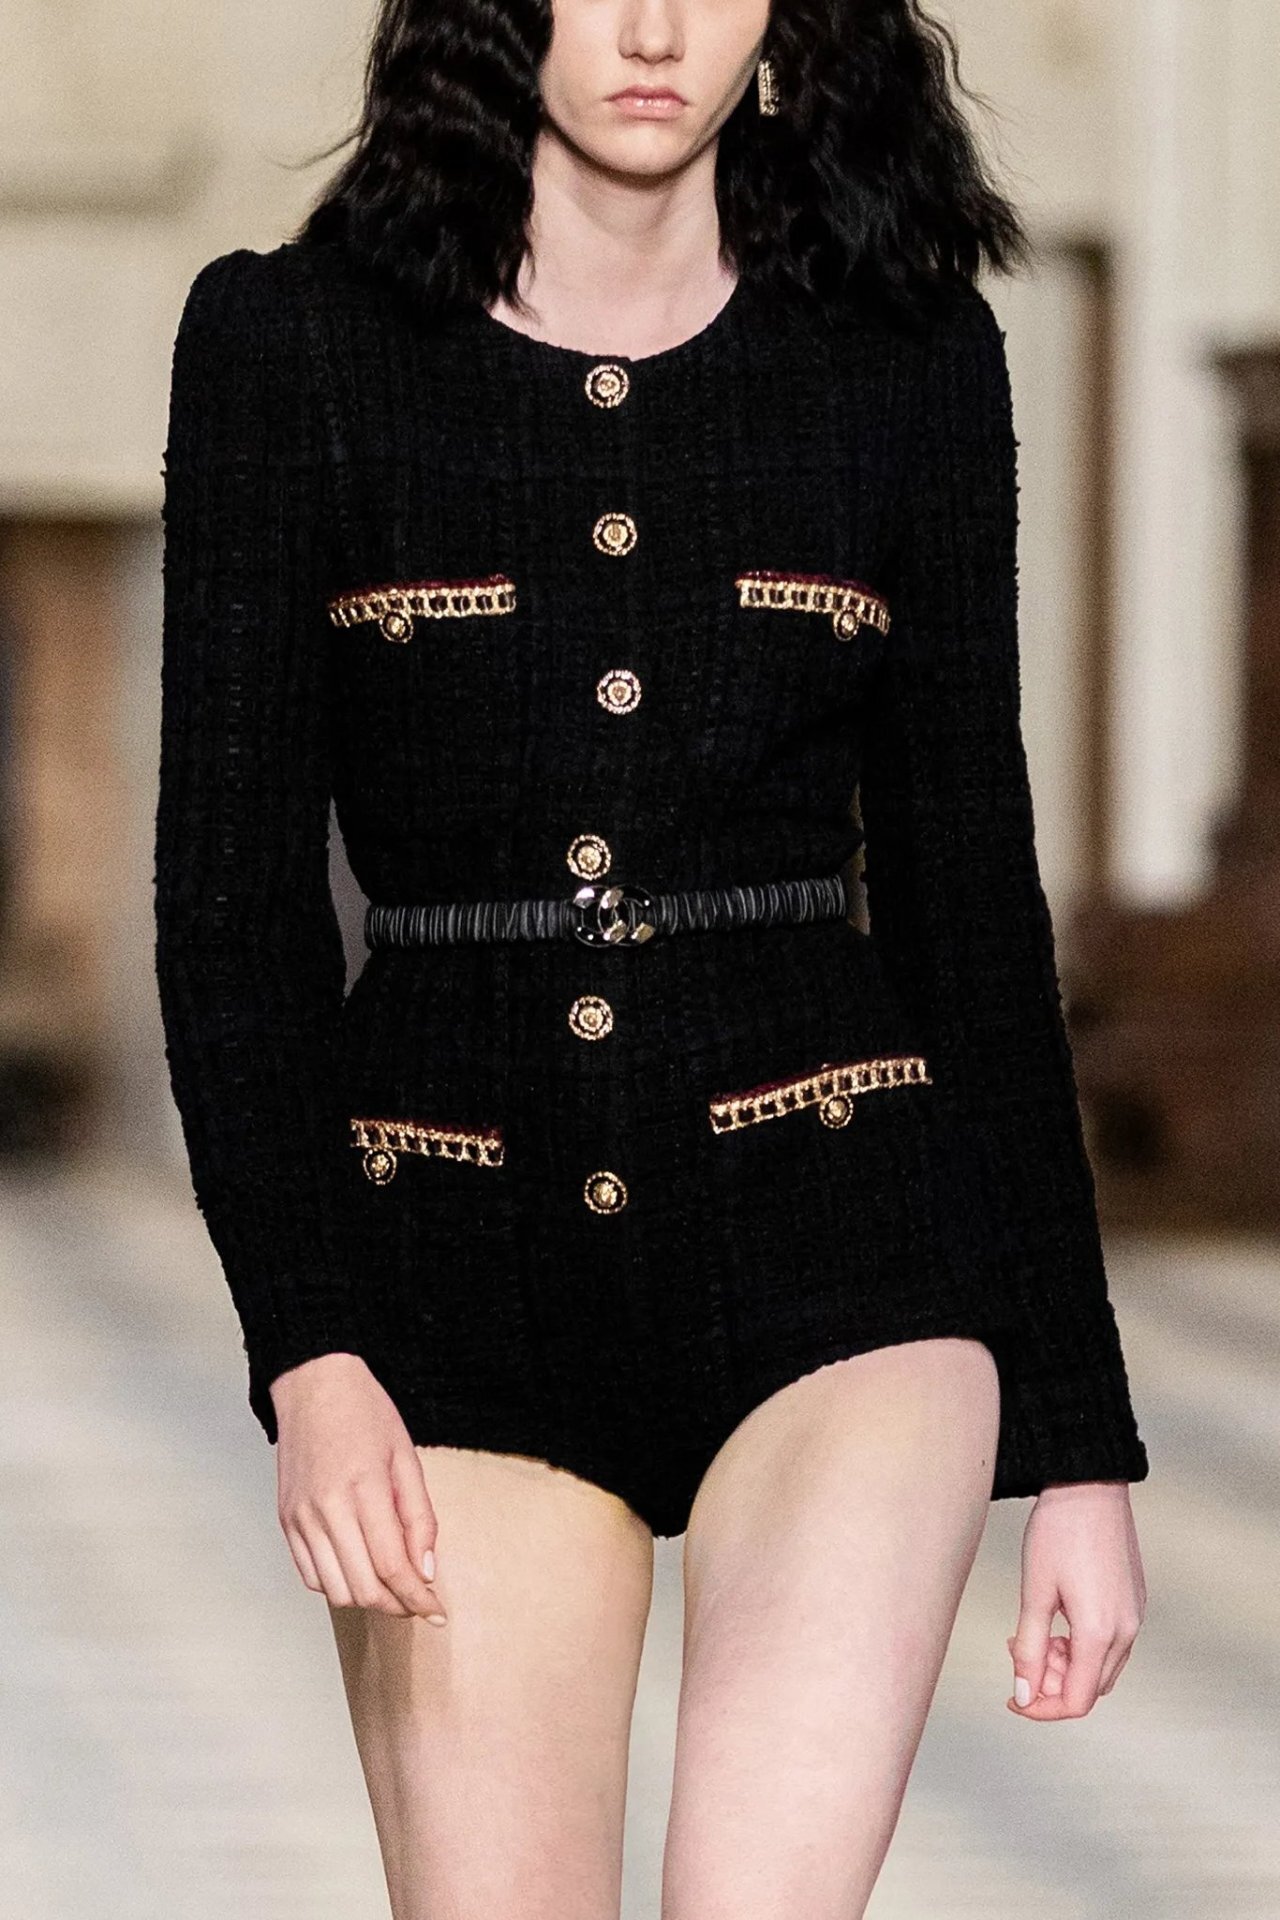 Chanel Wool Romper with Contrast Trim.jpg